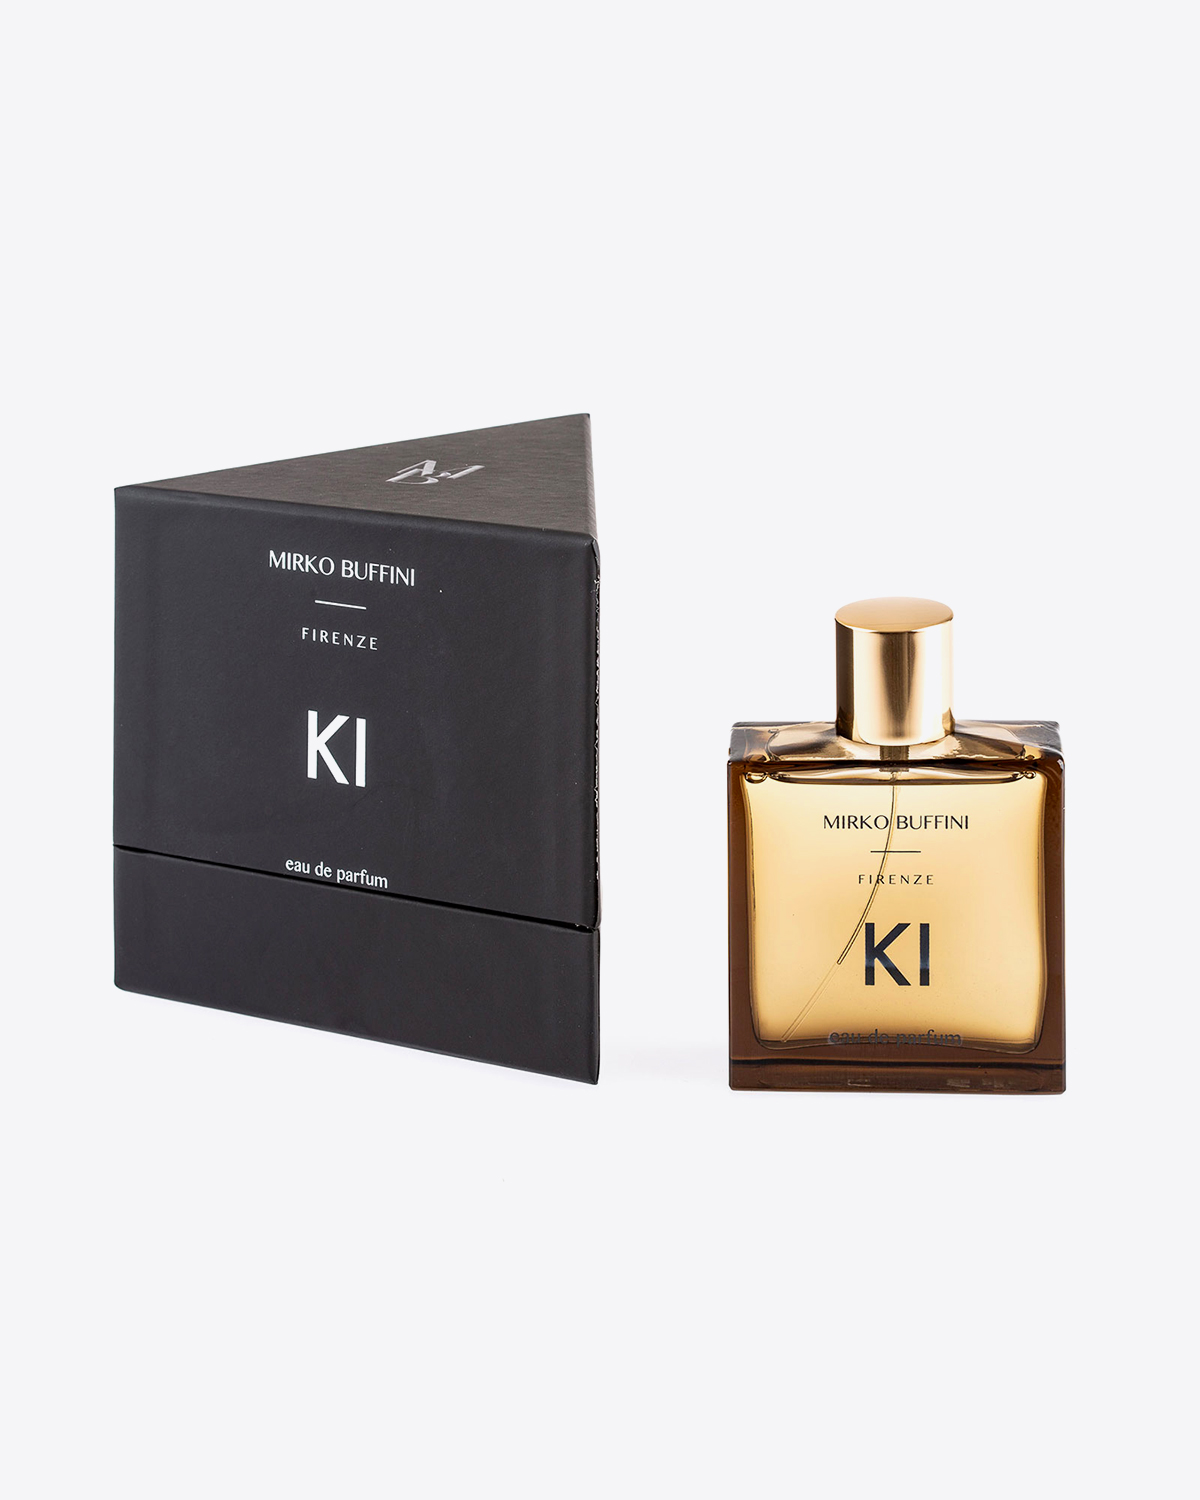 Parfum Ki Mirko Buffini. Flacon de 100 ml vendu dans sa boite triangulaire noire. Collection Black.